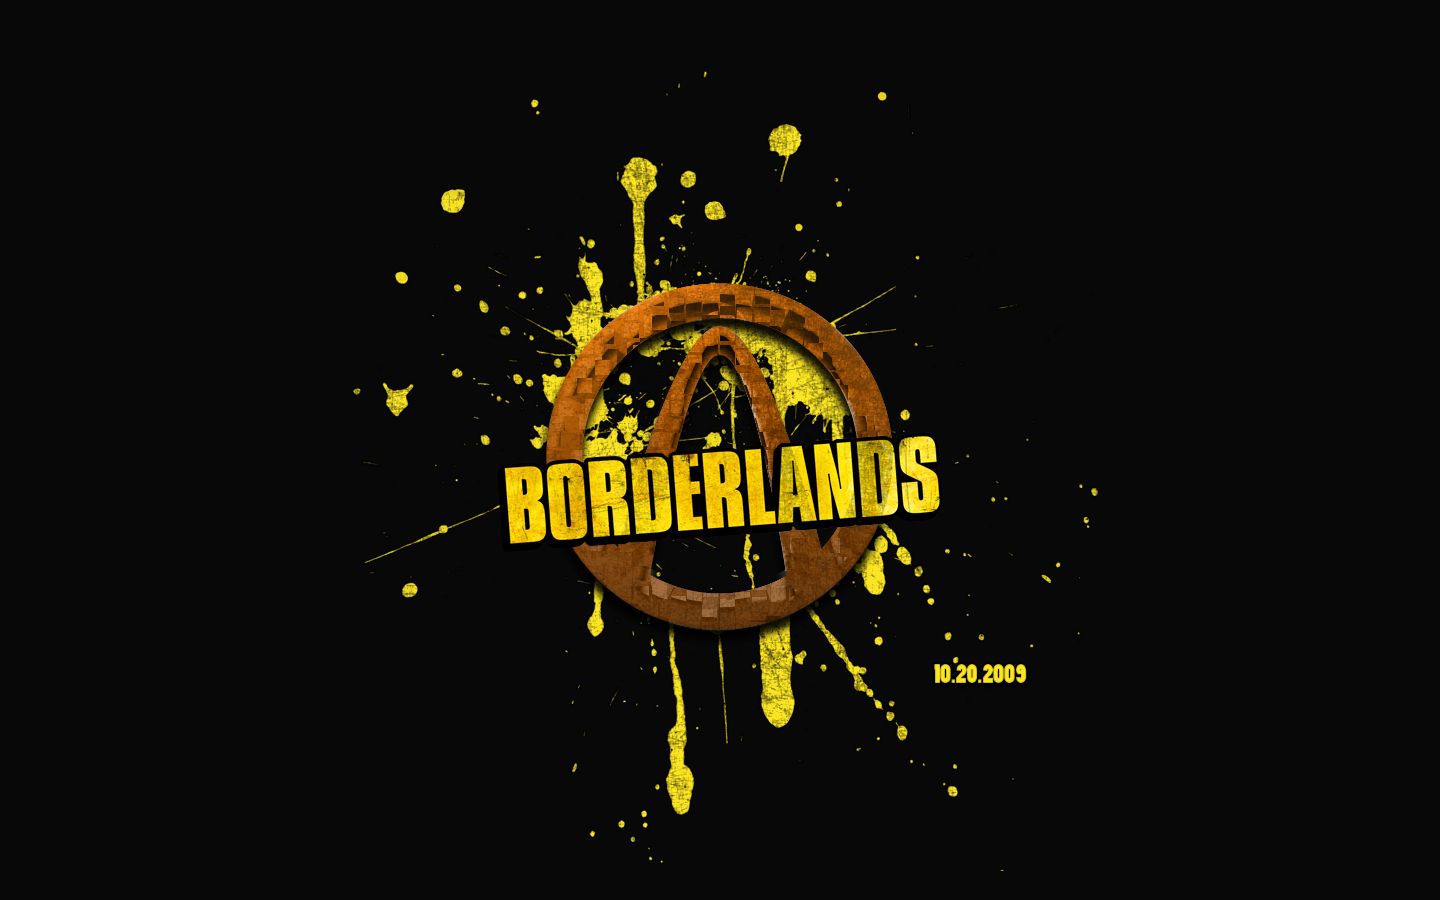 Borderlands - Borderlands 2 Wallpaper (34710561) - Fanpop